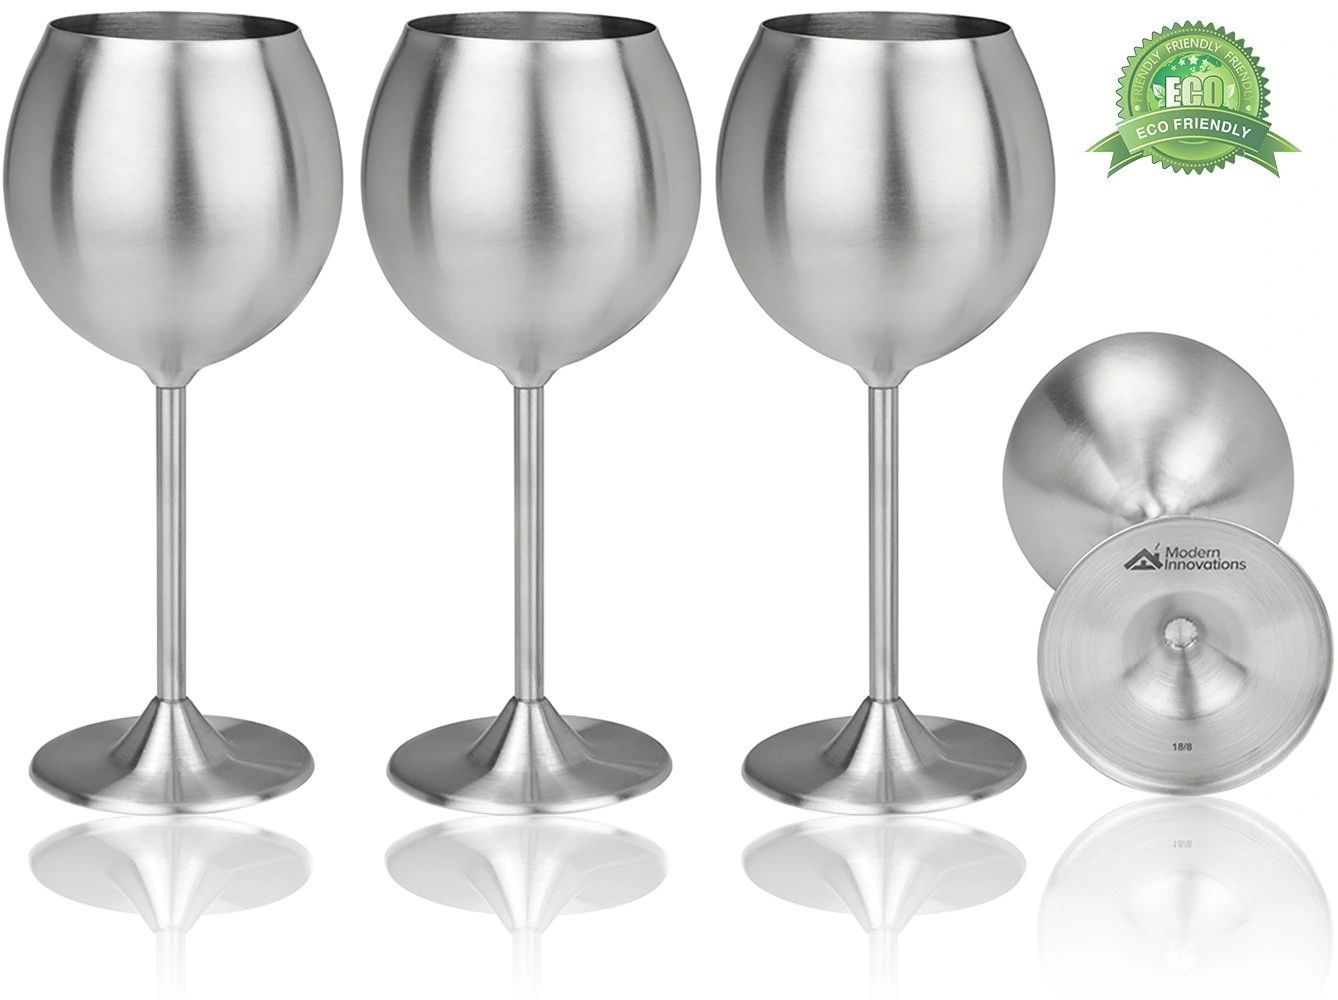 12 Oz Modern Innovations Stainless Steel Wine Glasses Set of 4 